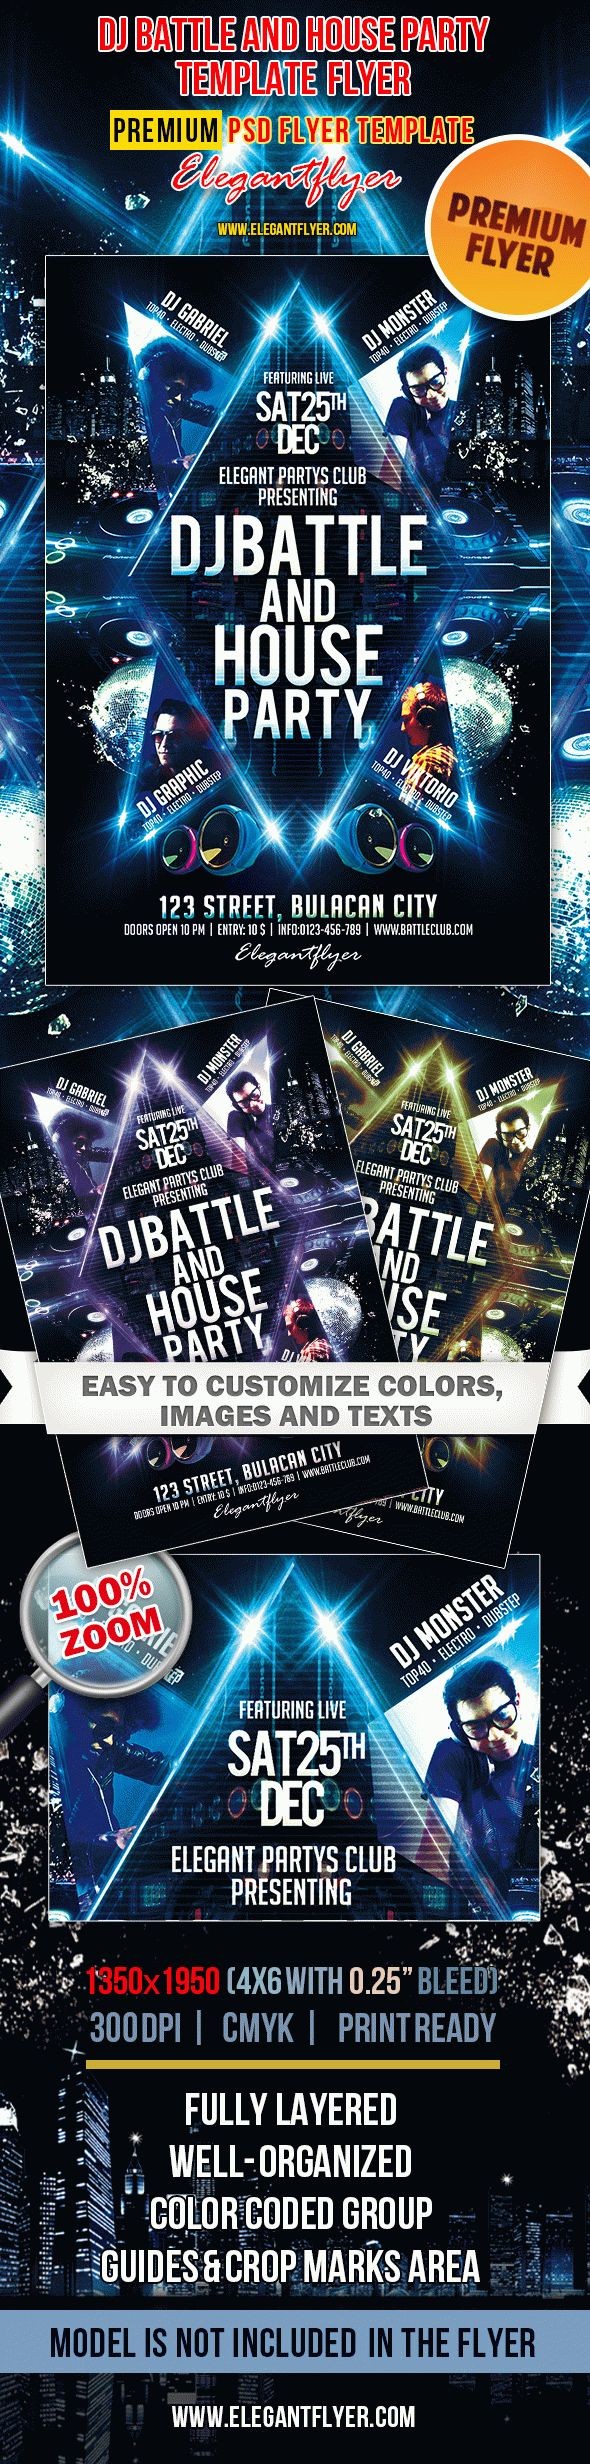 Dj Battle y House Party. by ElegantFlyer